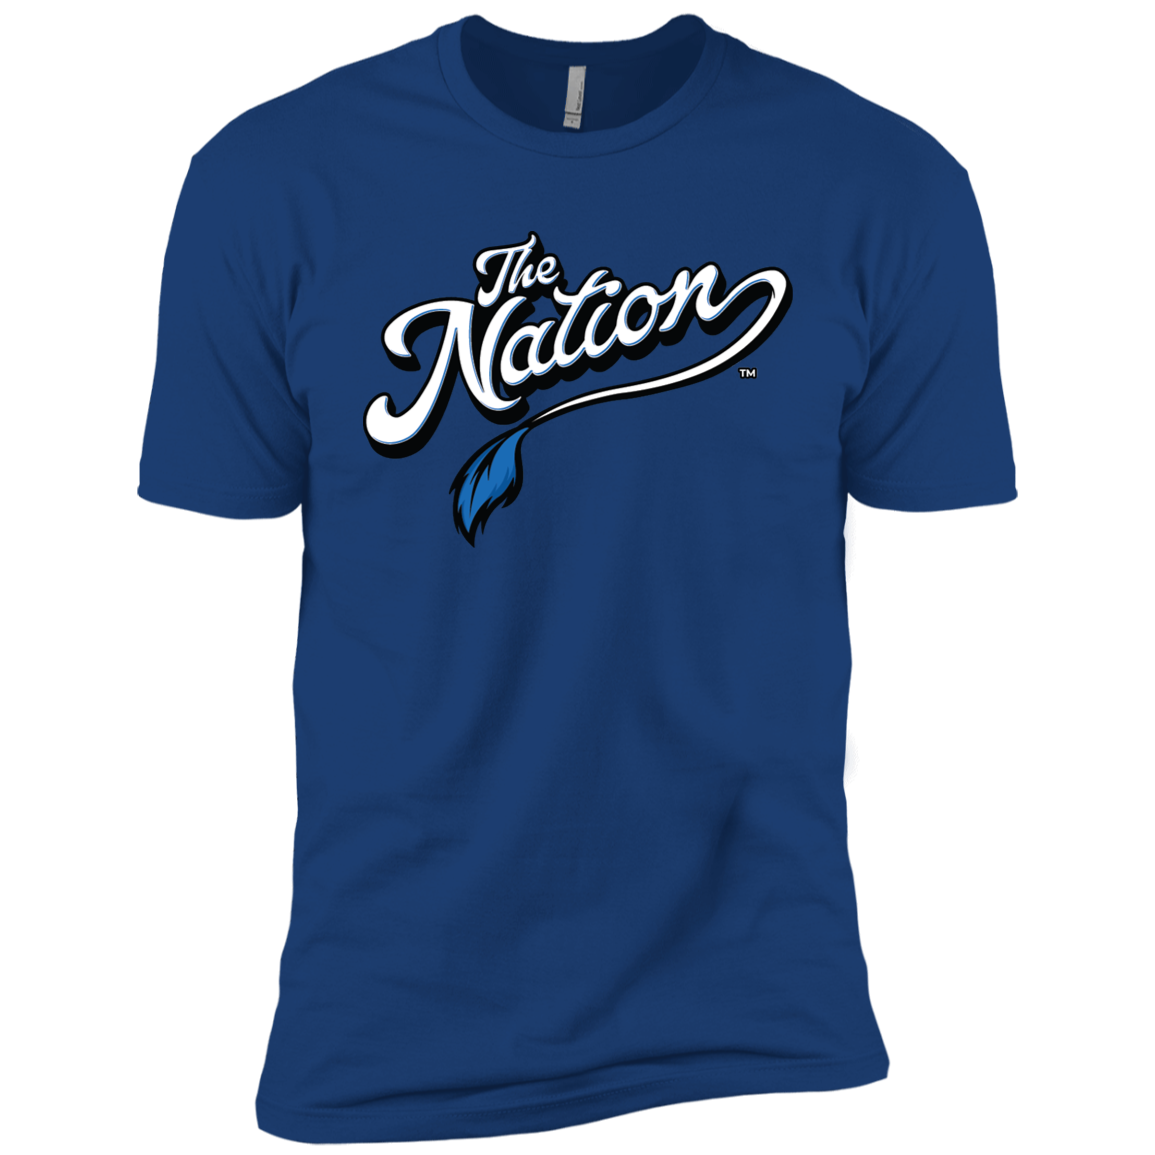 The Nation™ Boys' Cotton T-Shirt